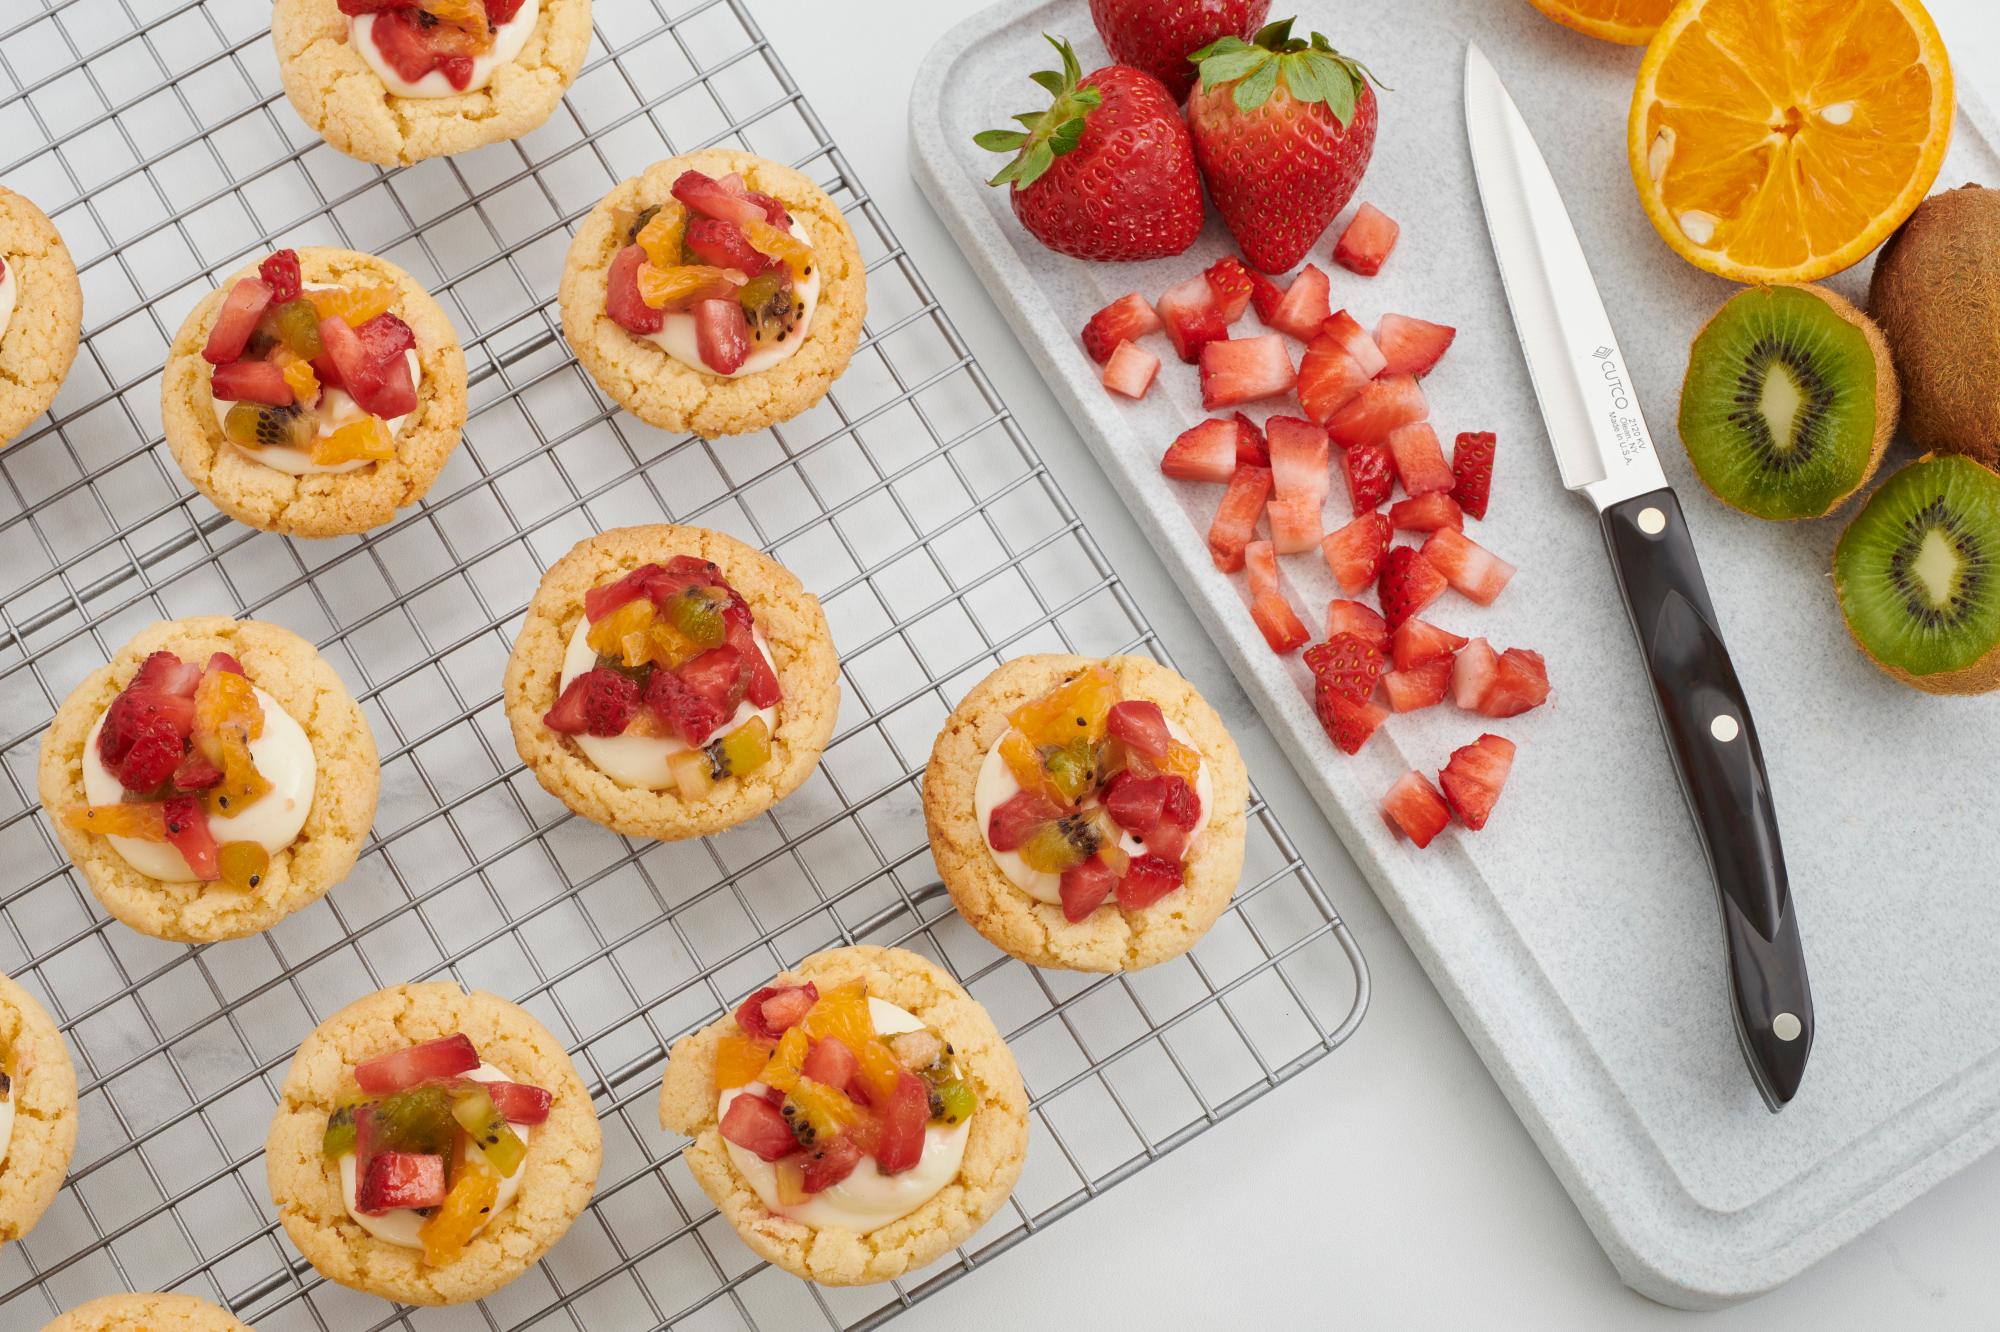 Sugar Cookie Tarts With Strawberries, Kiwi and Clementine